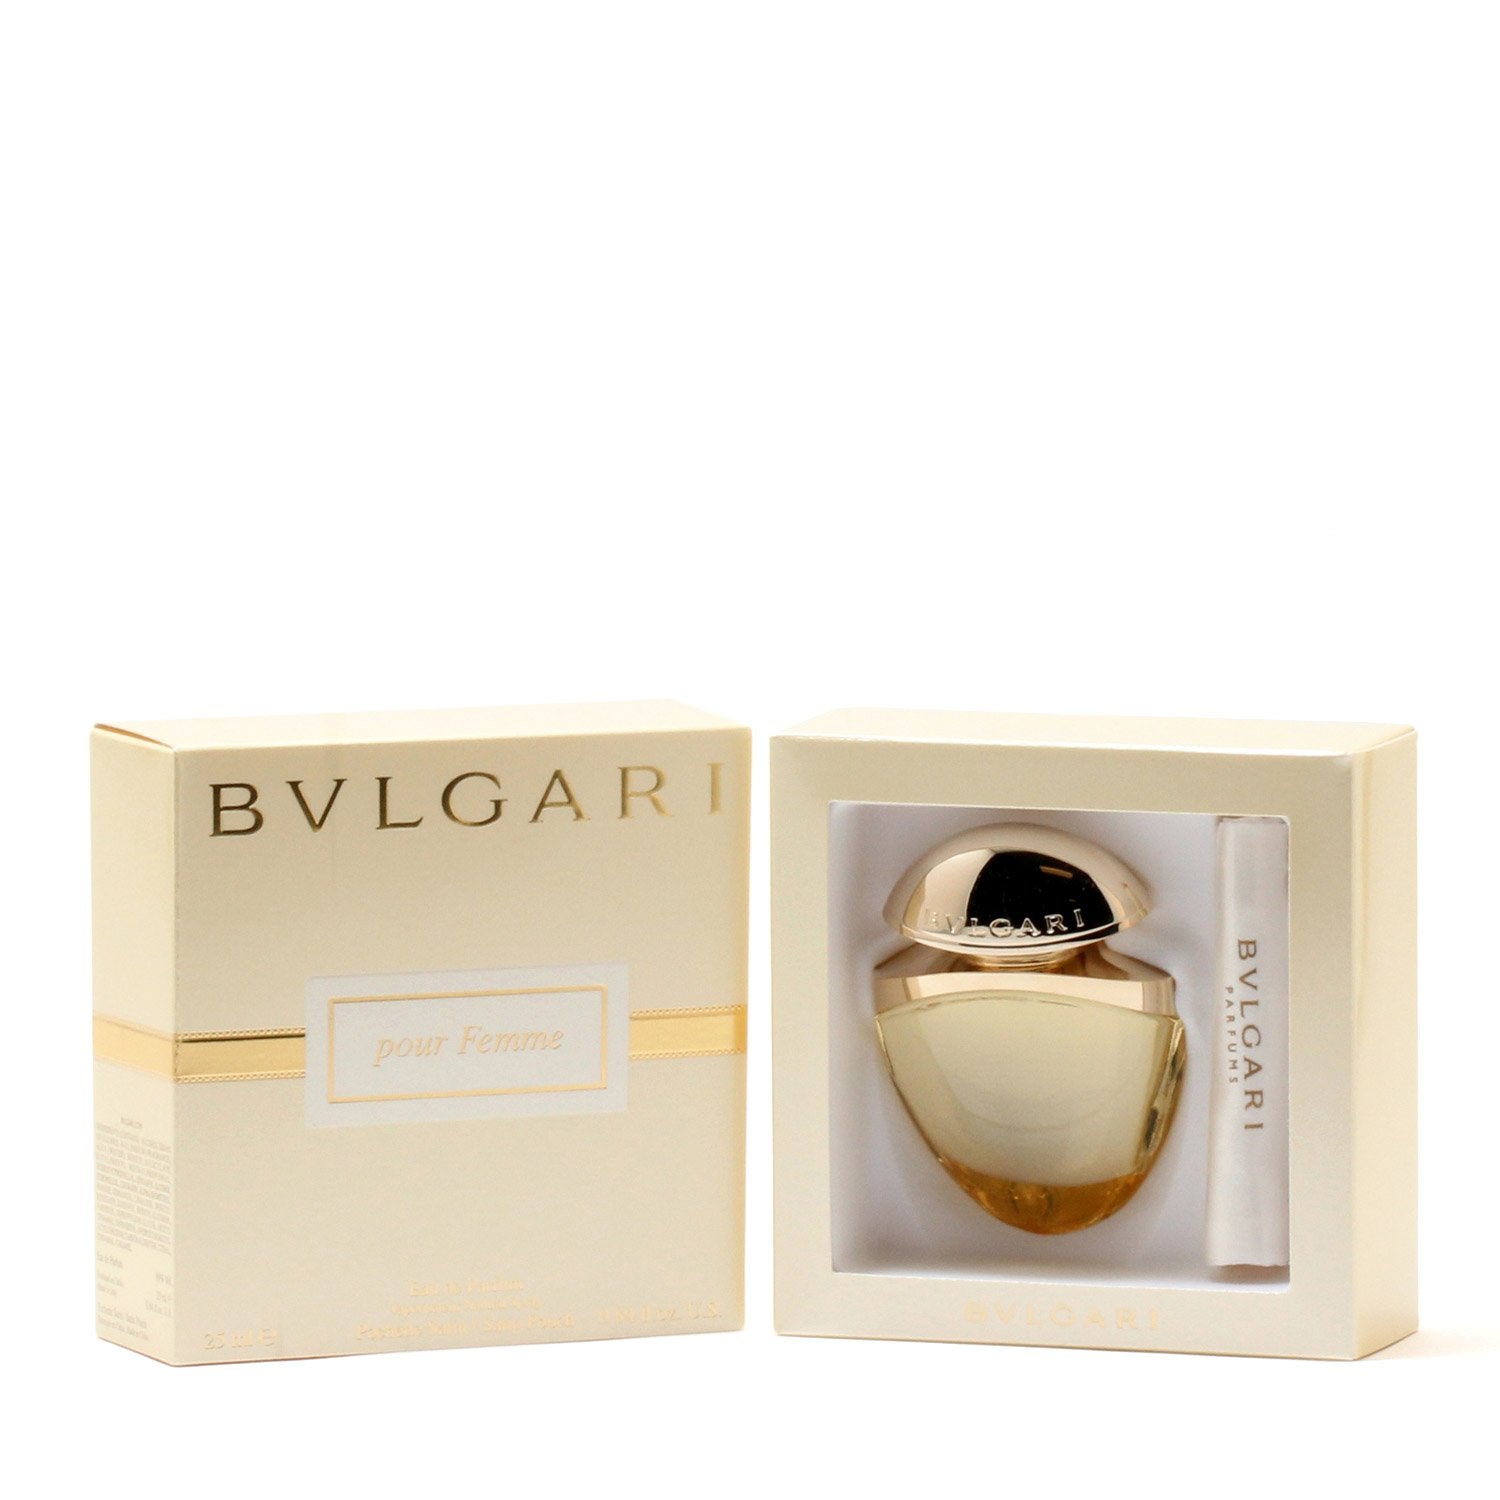 Perfume - BVLGARI JEWEL CHARM FOR WOMEN - EAU DE PARFUM SPRAY, 0.84 OZ